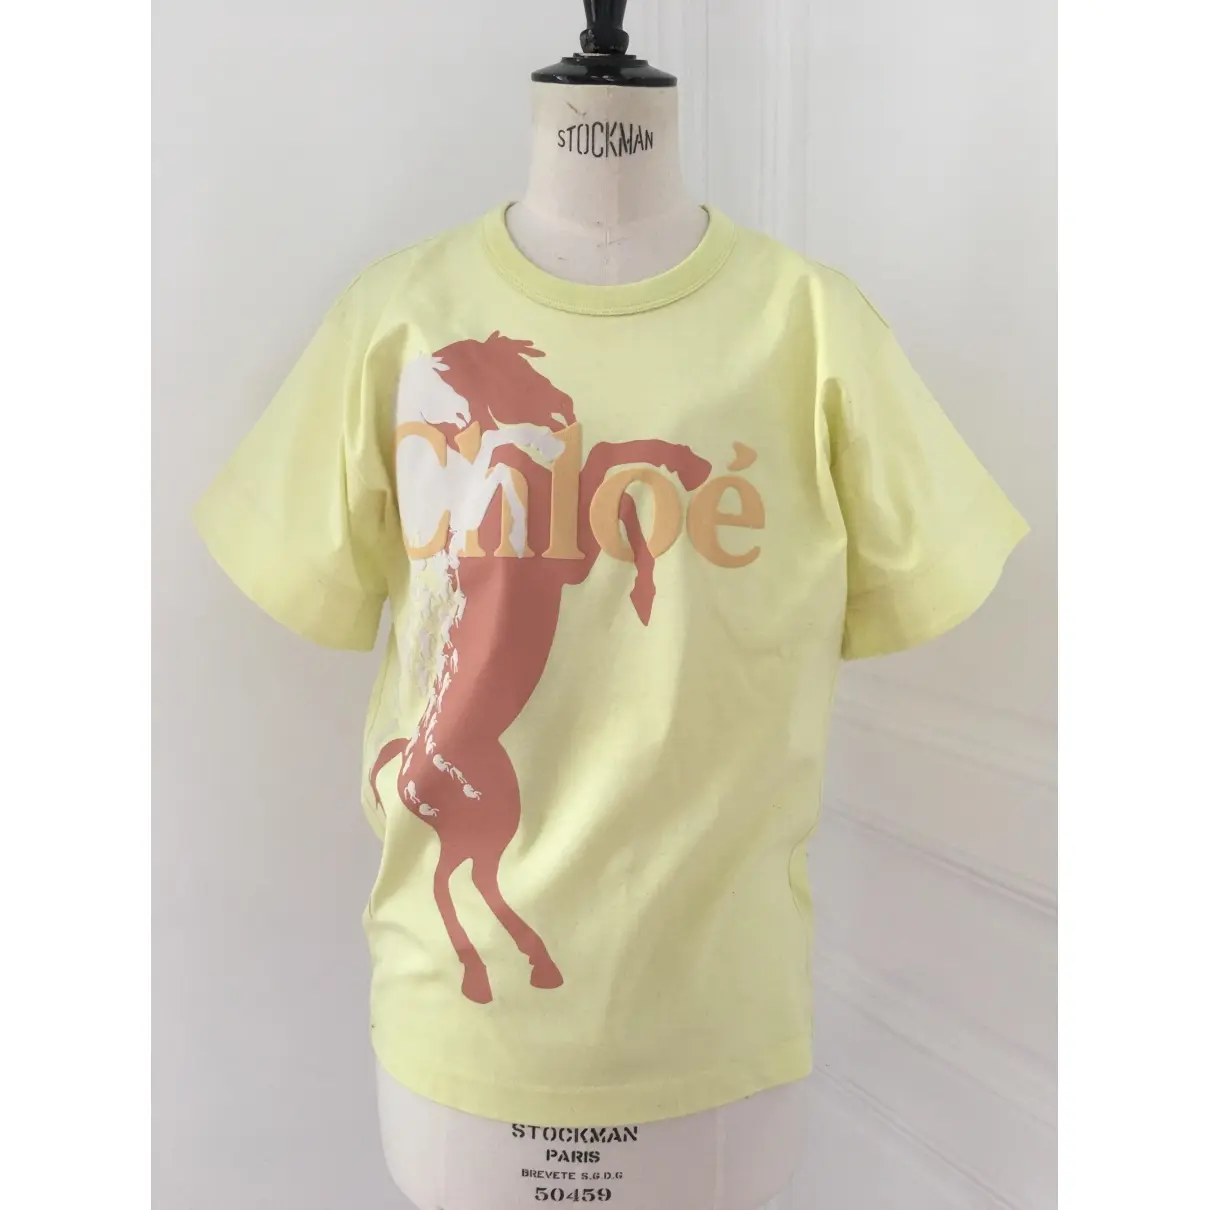 Chloé T-shirt for sale